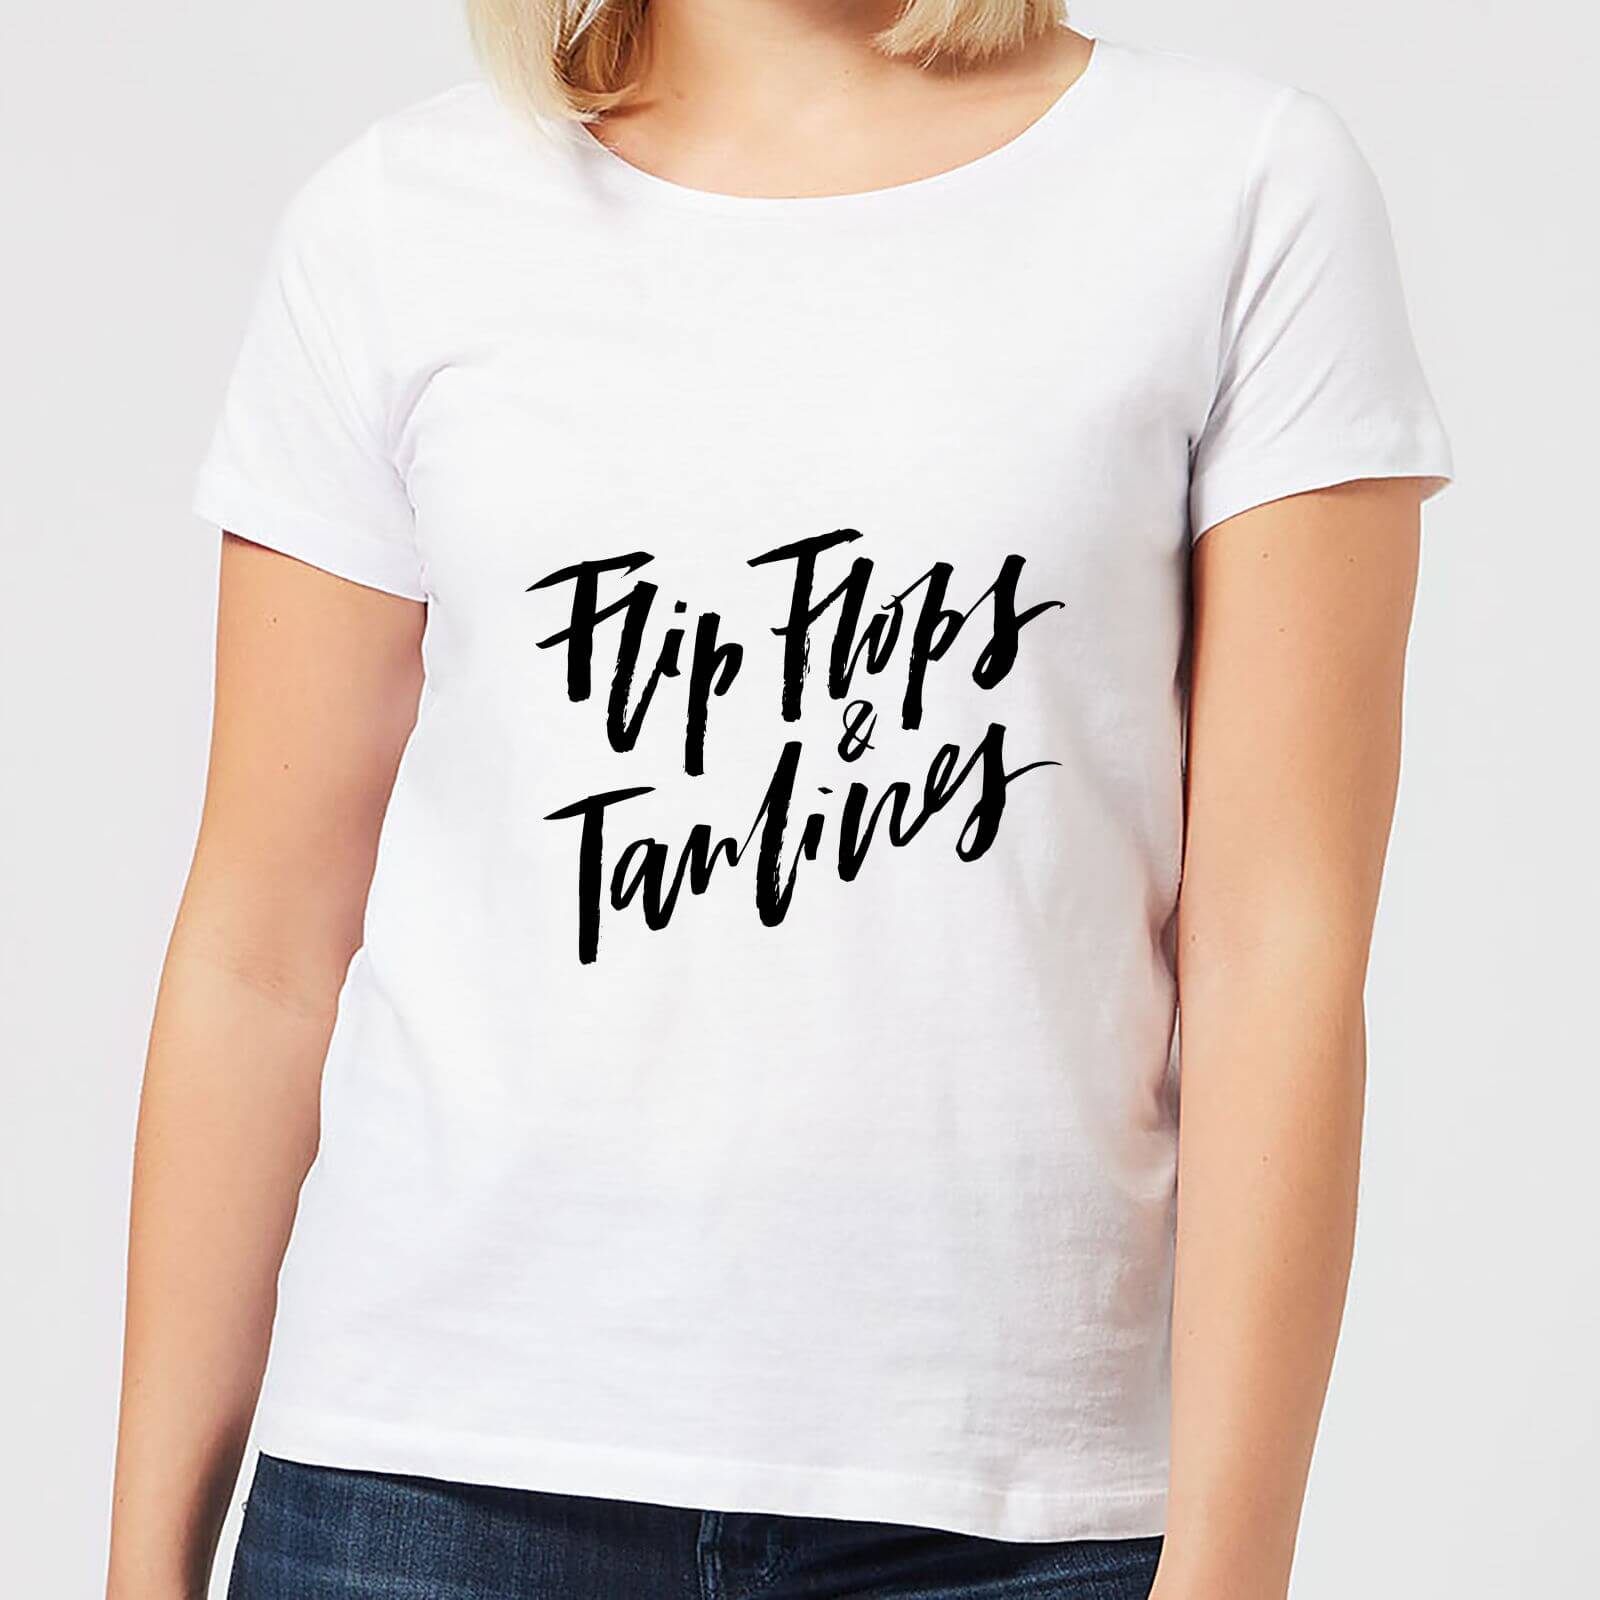 Flip Flops and Tan Lines Women's T-Shirt - White - L - White